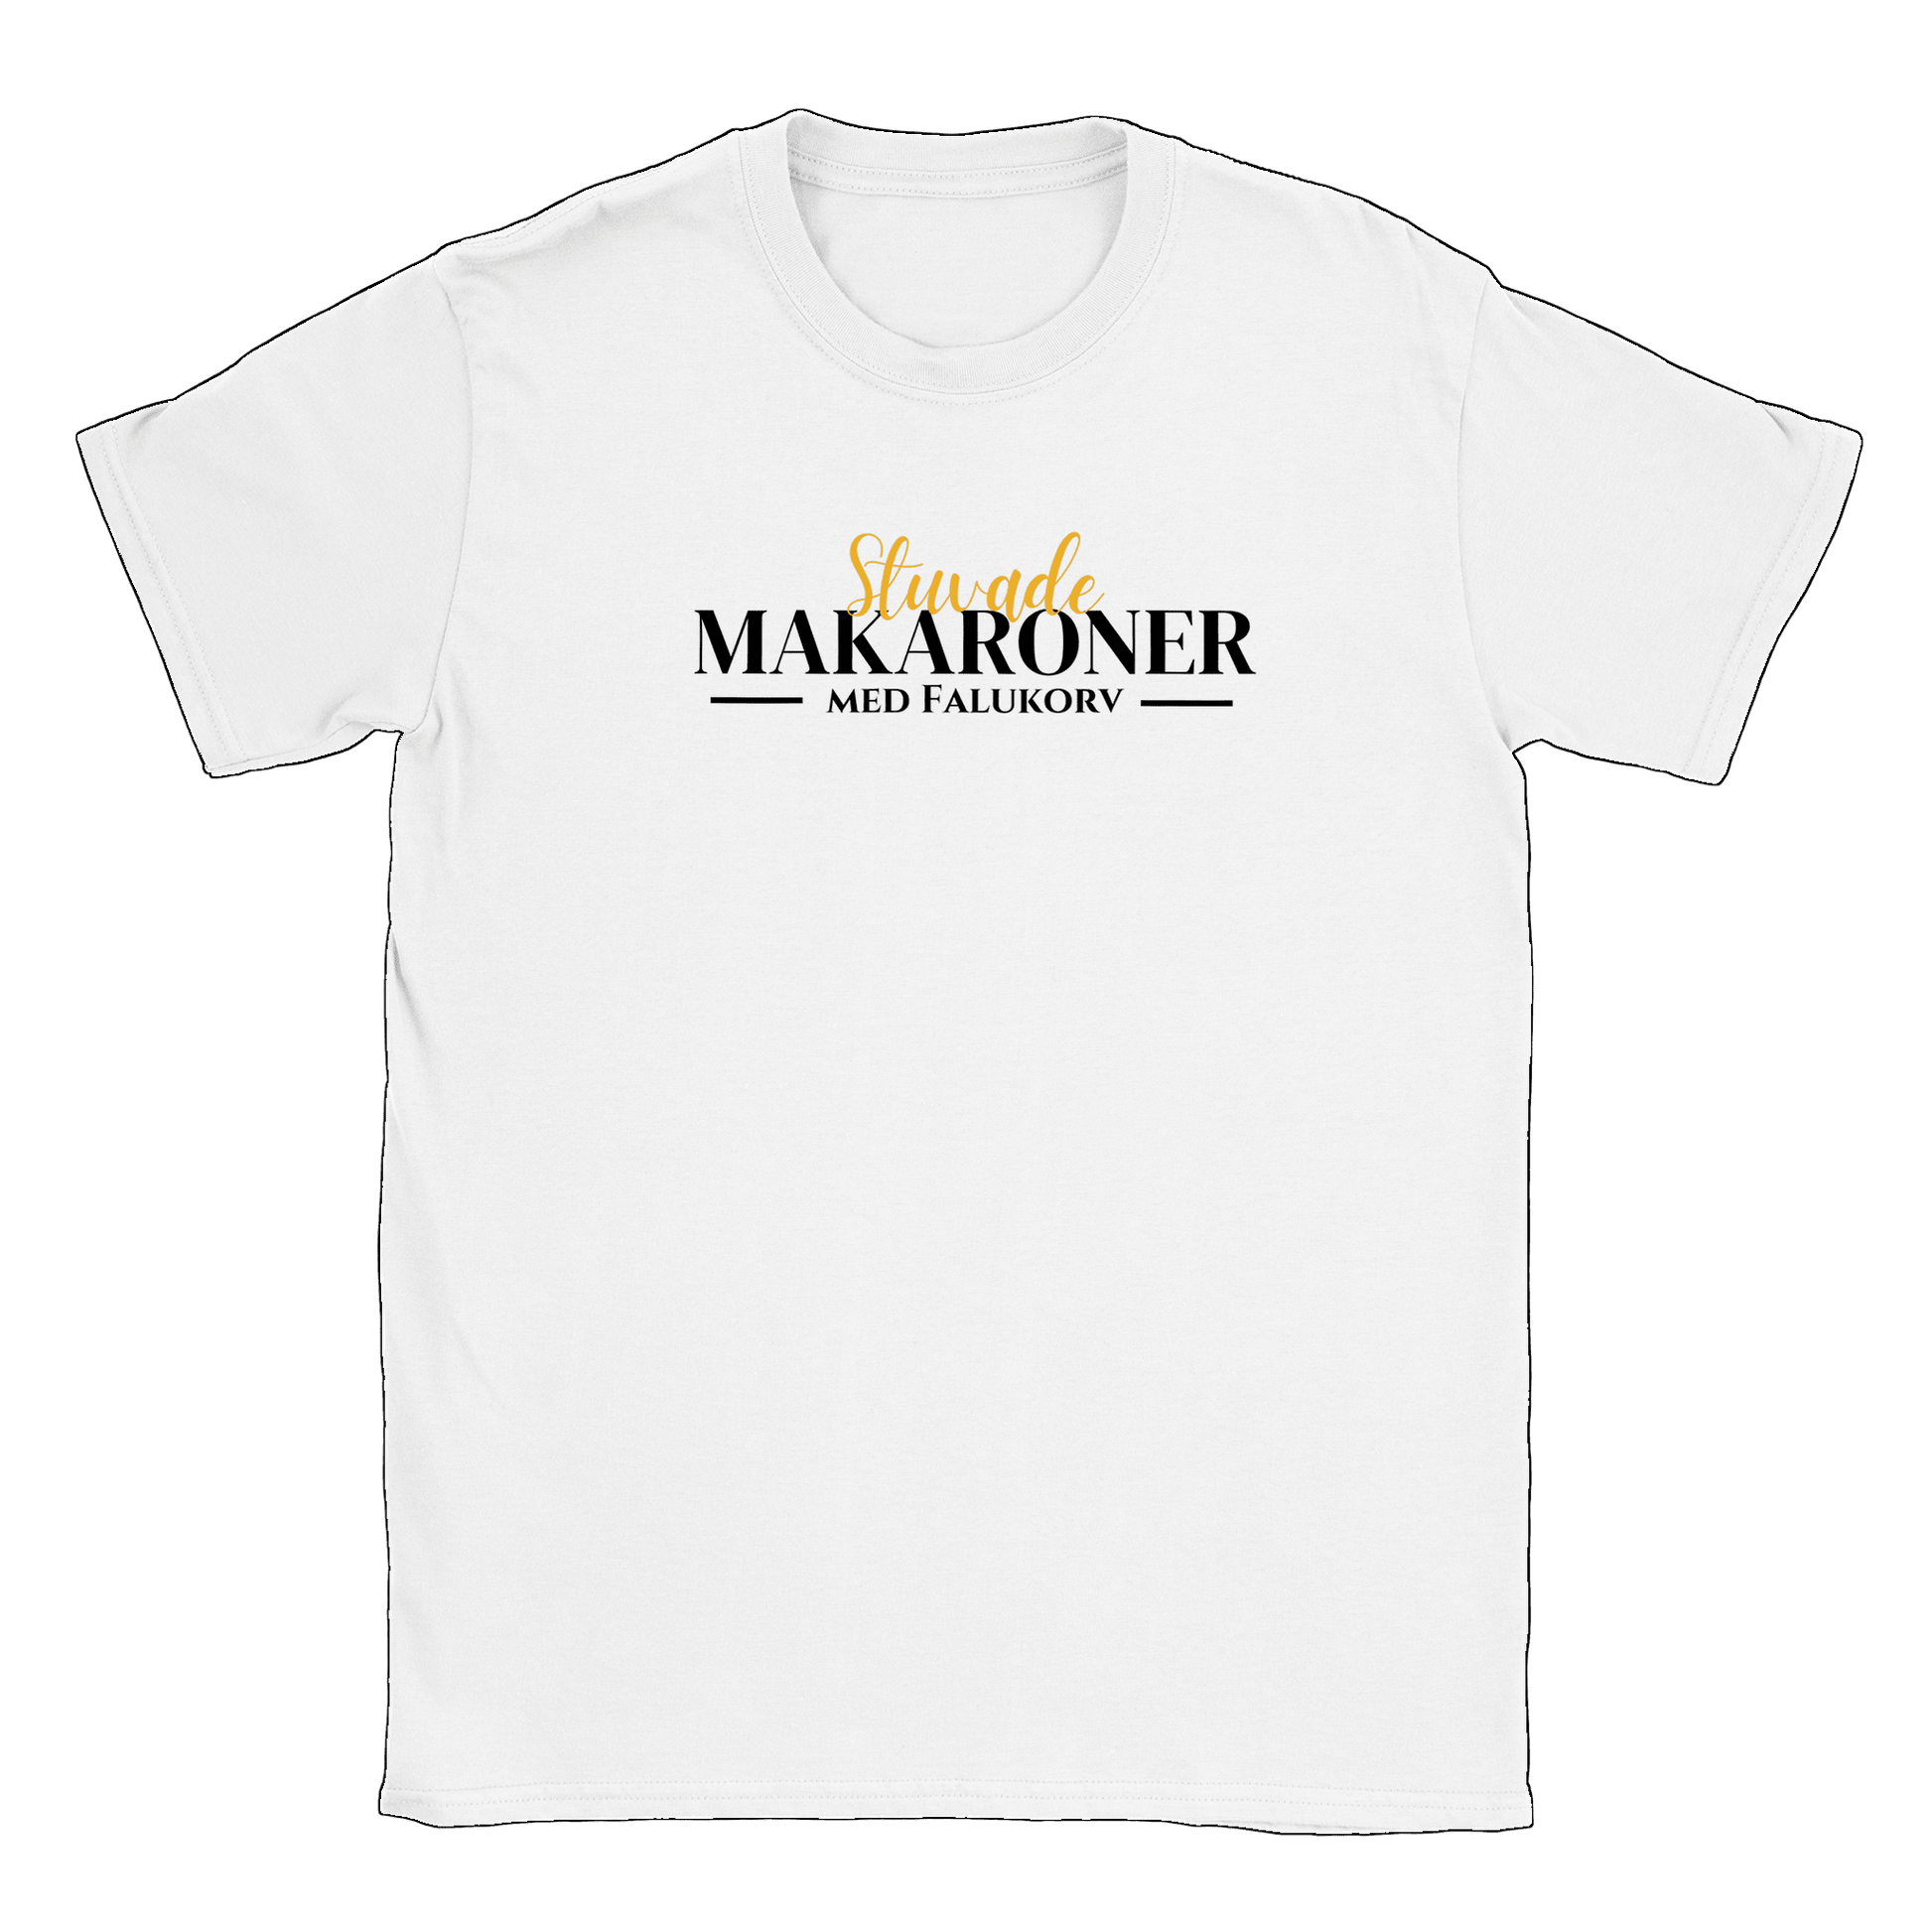 Stuvade makaroner med falukorv - T-shirt Vit